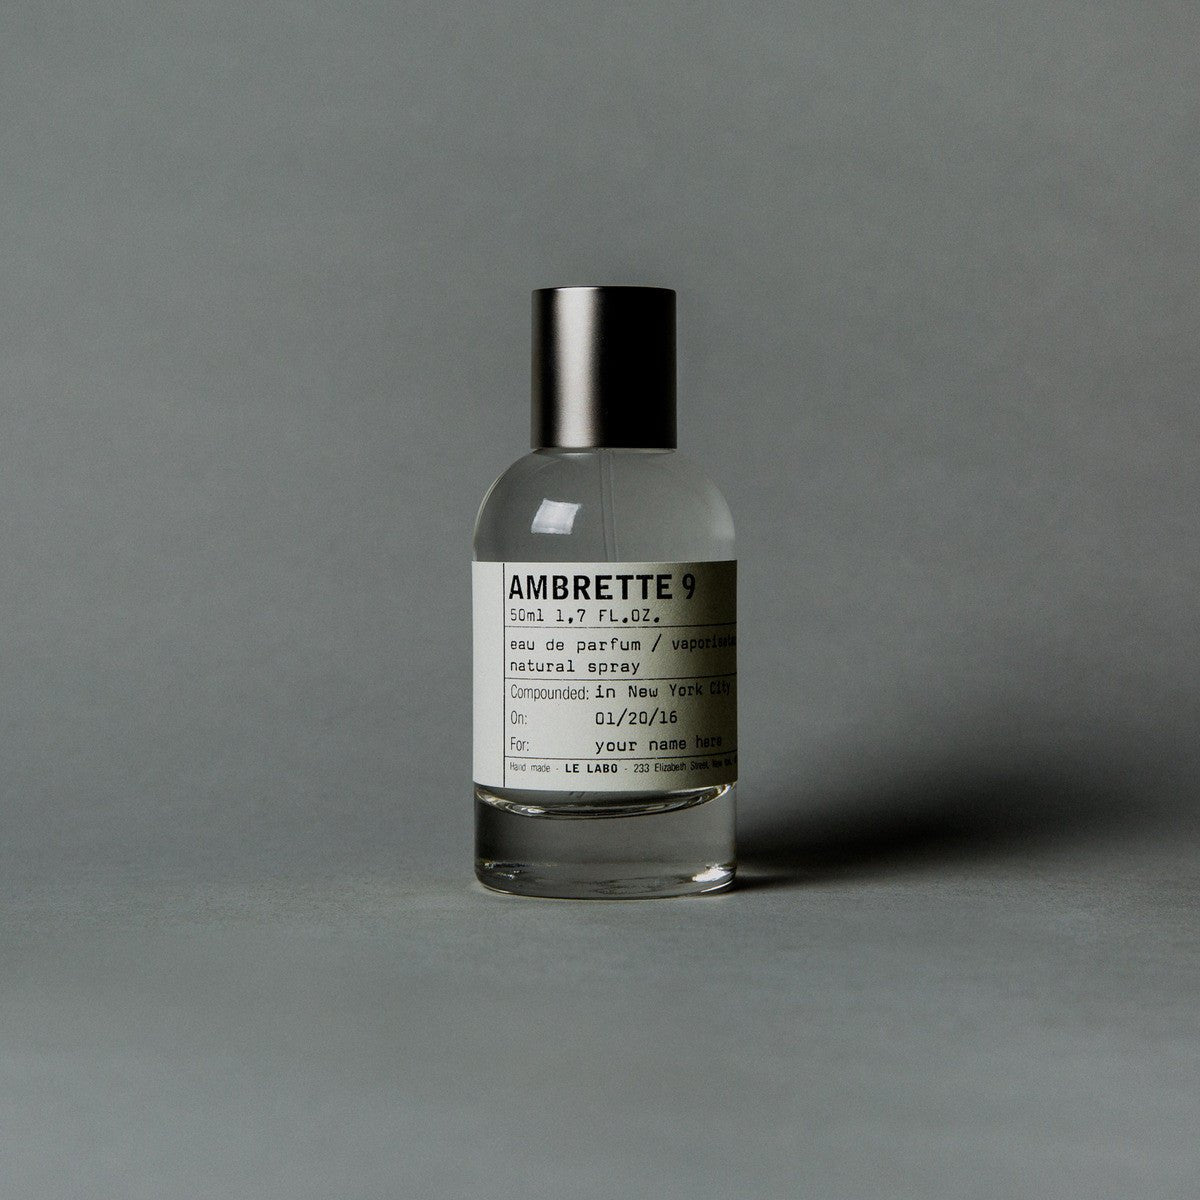 Le Labo Ambrette 9 EDP | My Perfume Shop Australia